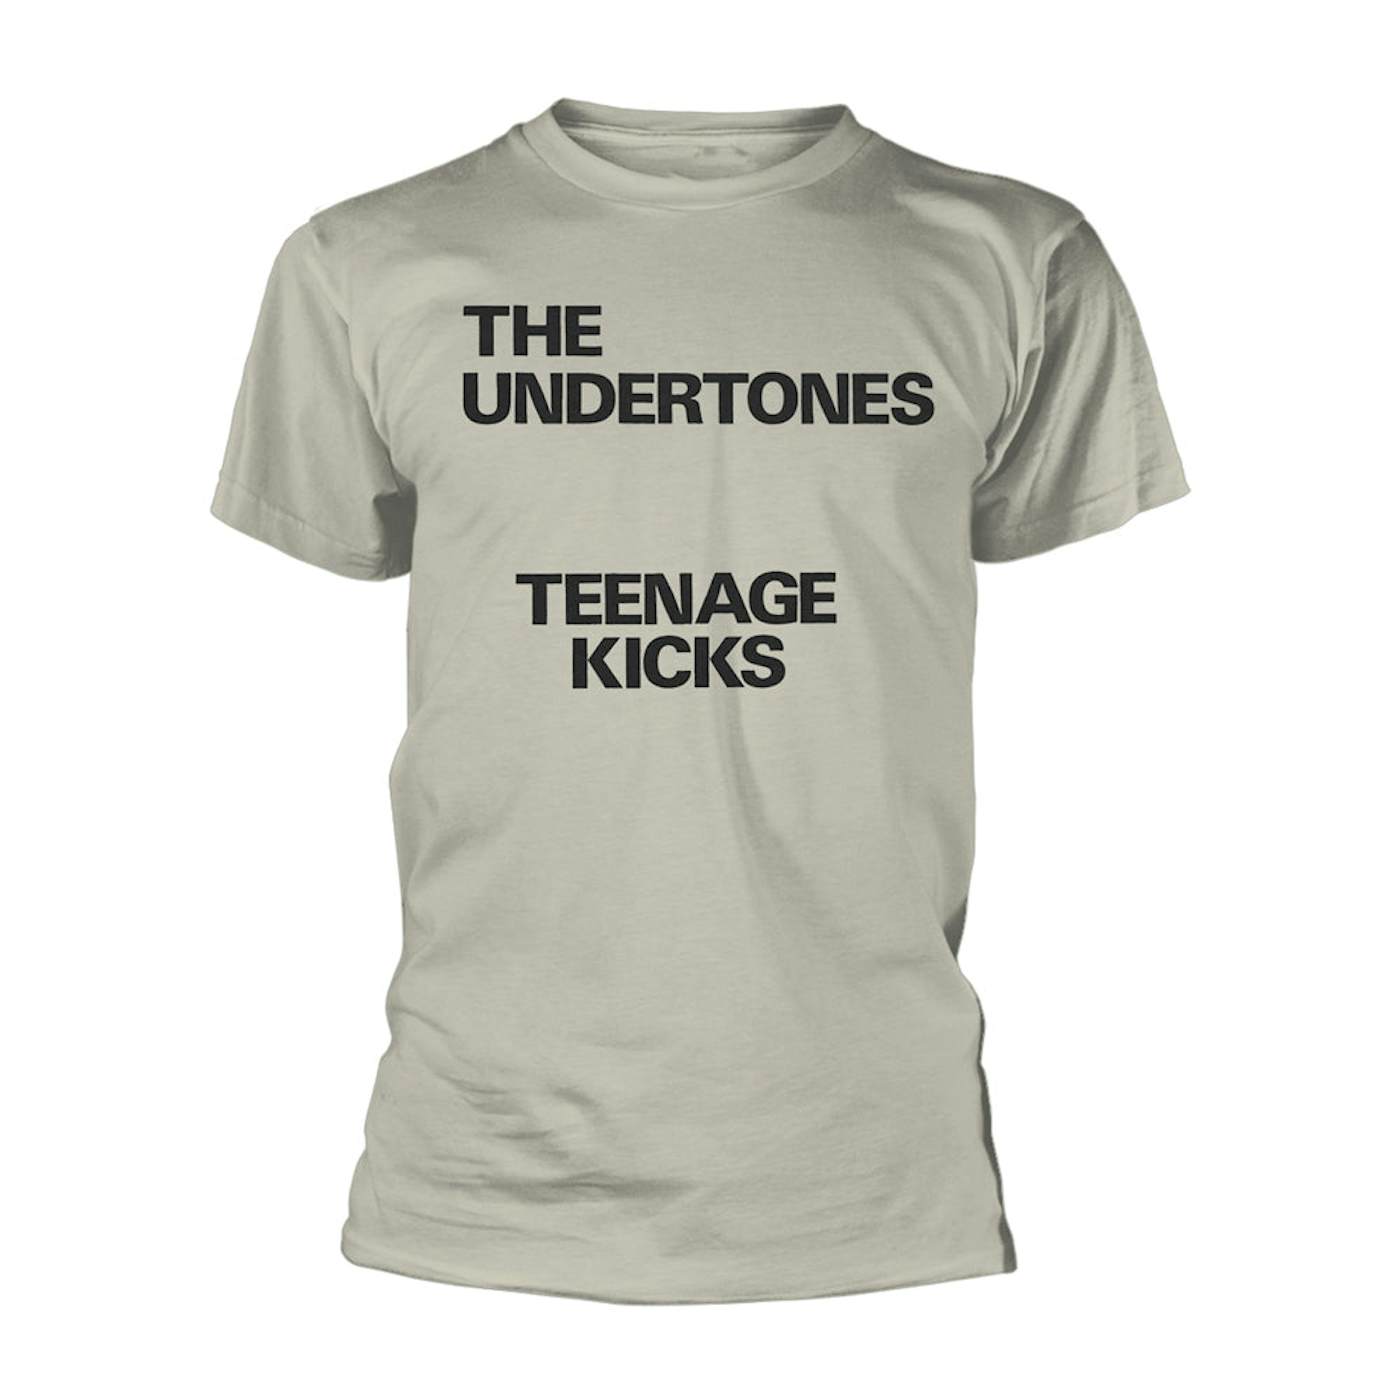 The Undertones T Shirt - Teenage Kicks Text